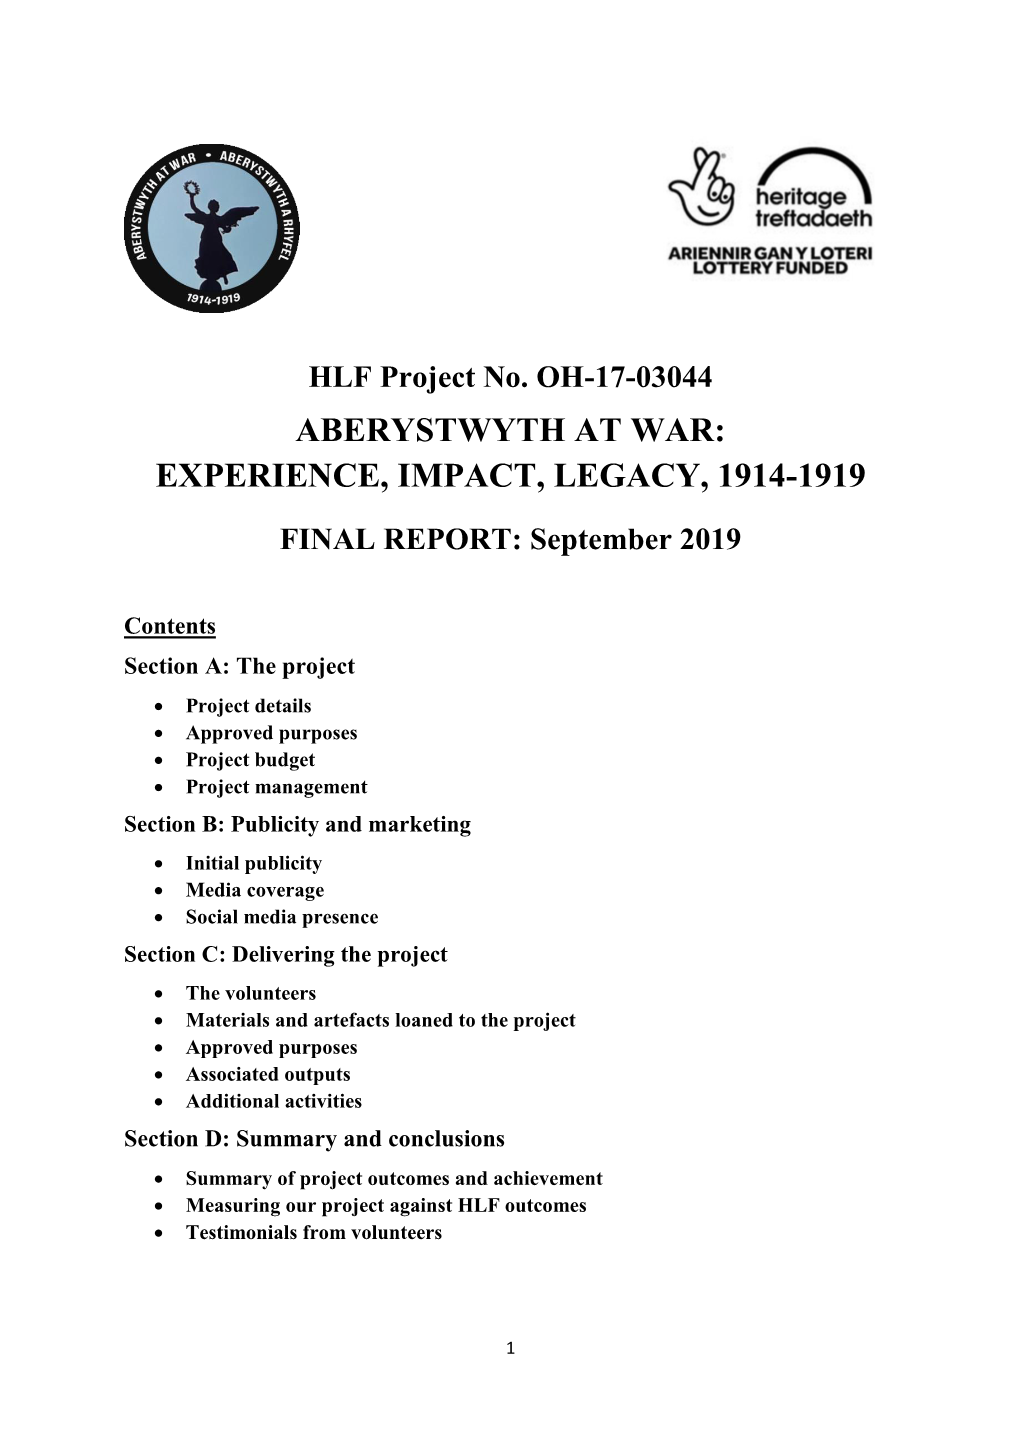 Aberystwyth at War: Experience, Impact, Legacy, 1914-1919